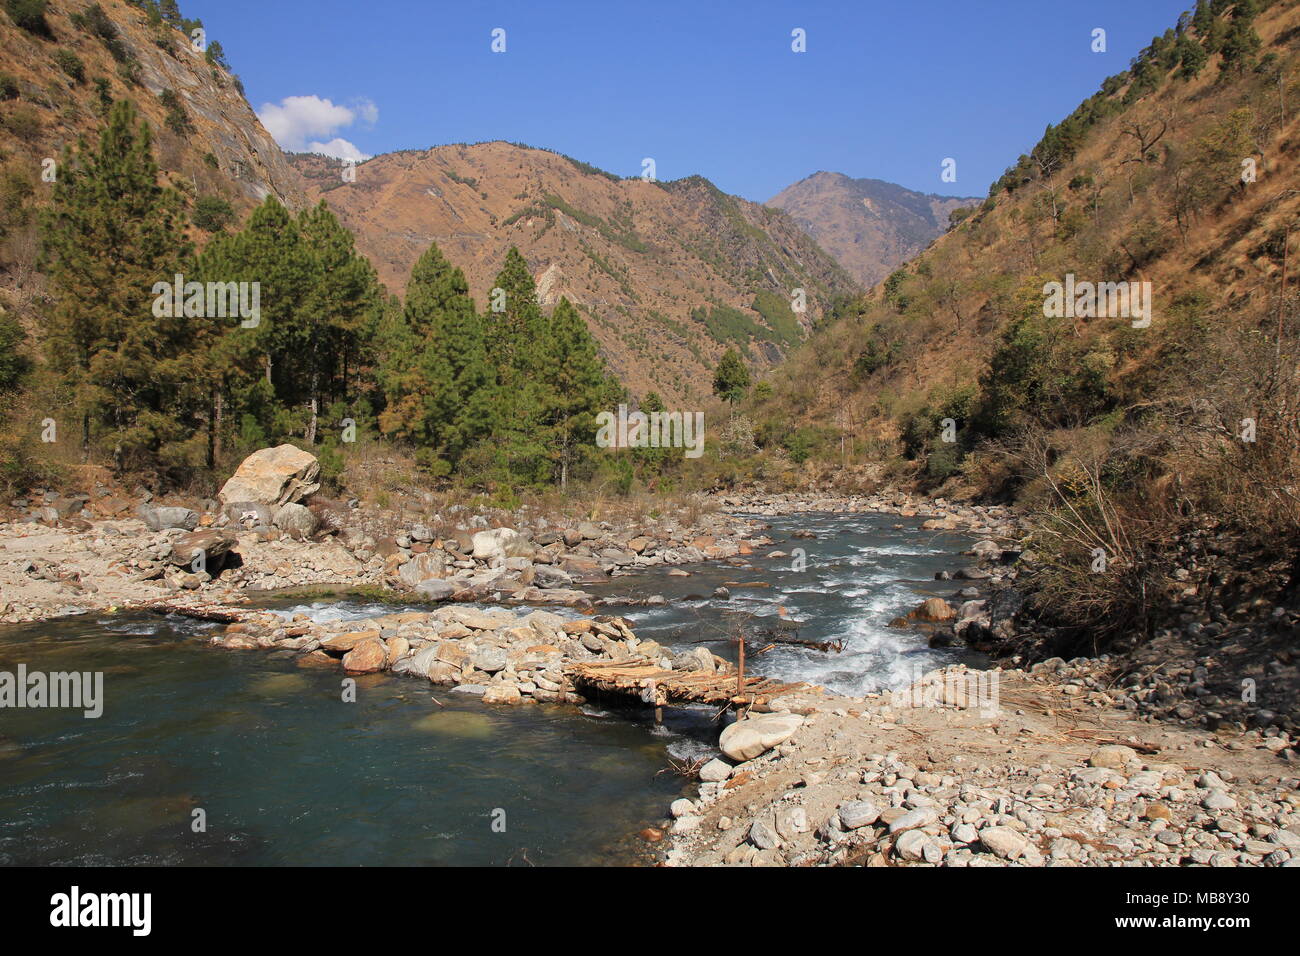 Holzbrücke und Langtang Khola, Fluss in Nepal. Szene in der Nähe von Shyaphru Besi. Langtang National Park. Stockfoto